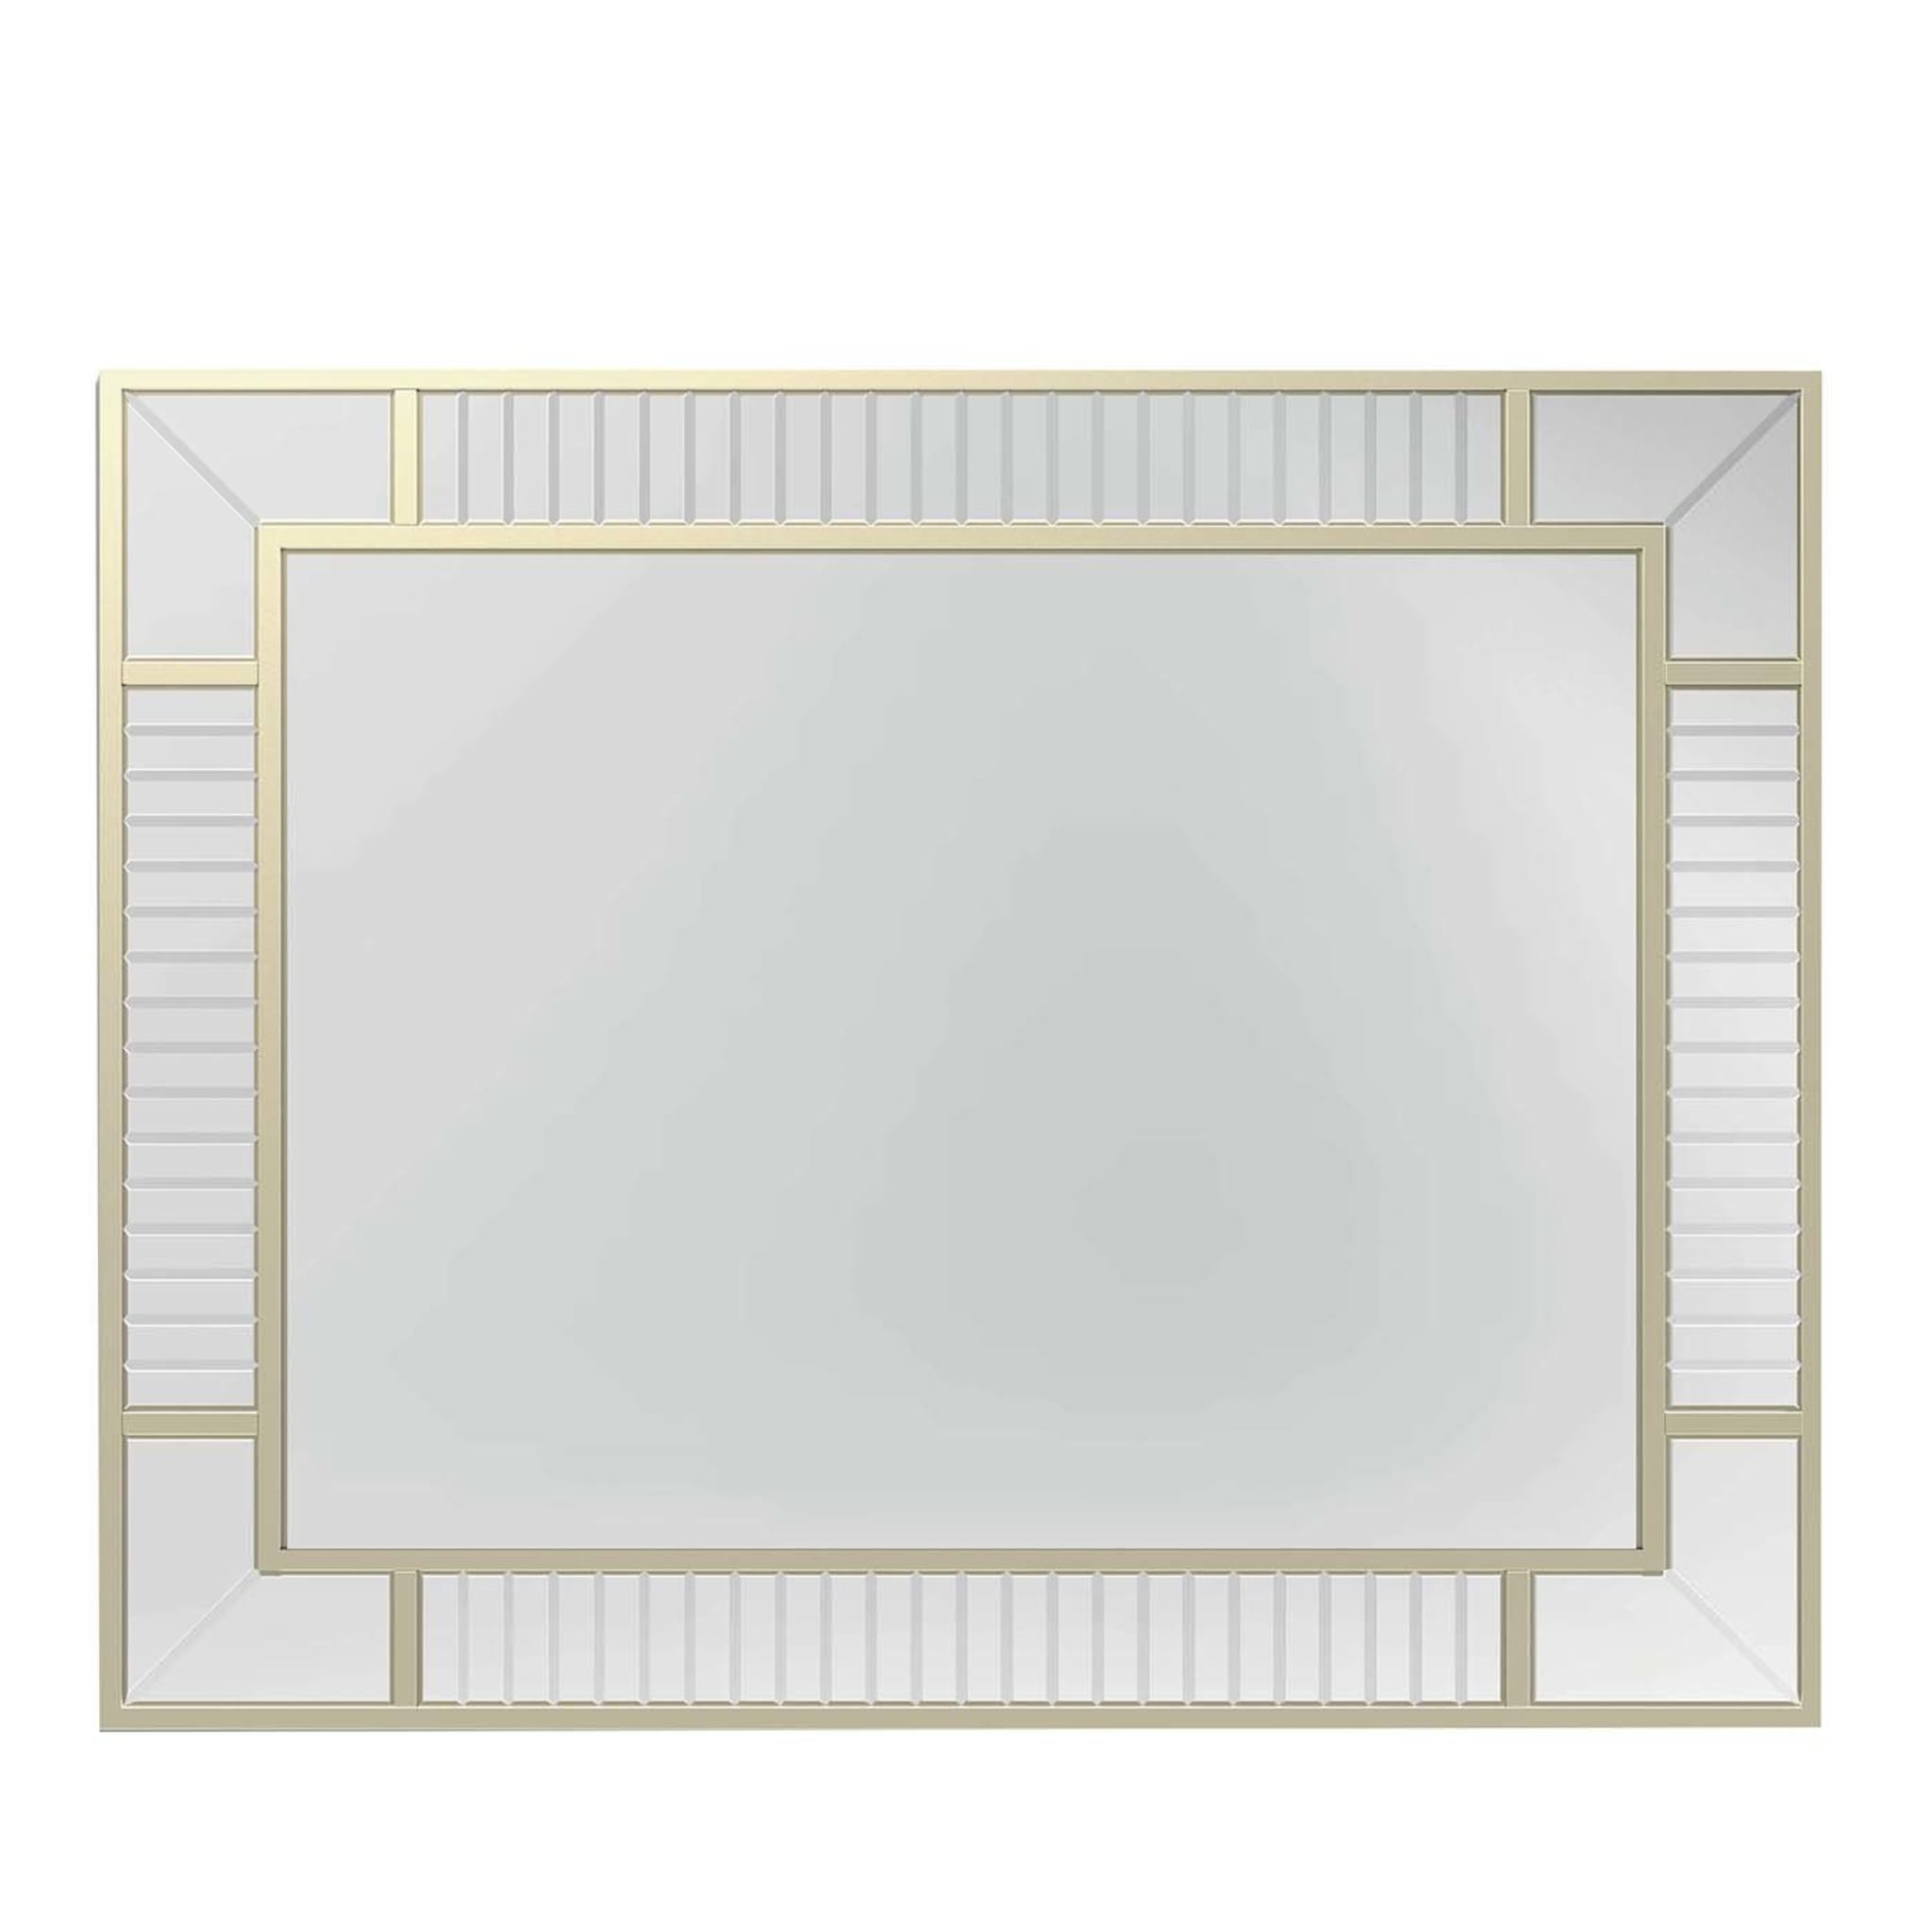 MIR5 Rectangular Wall Mirror - Main view